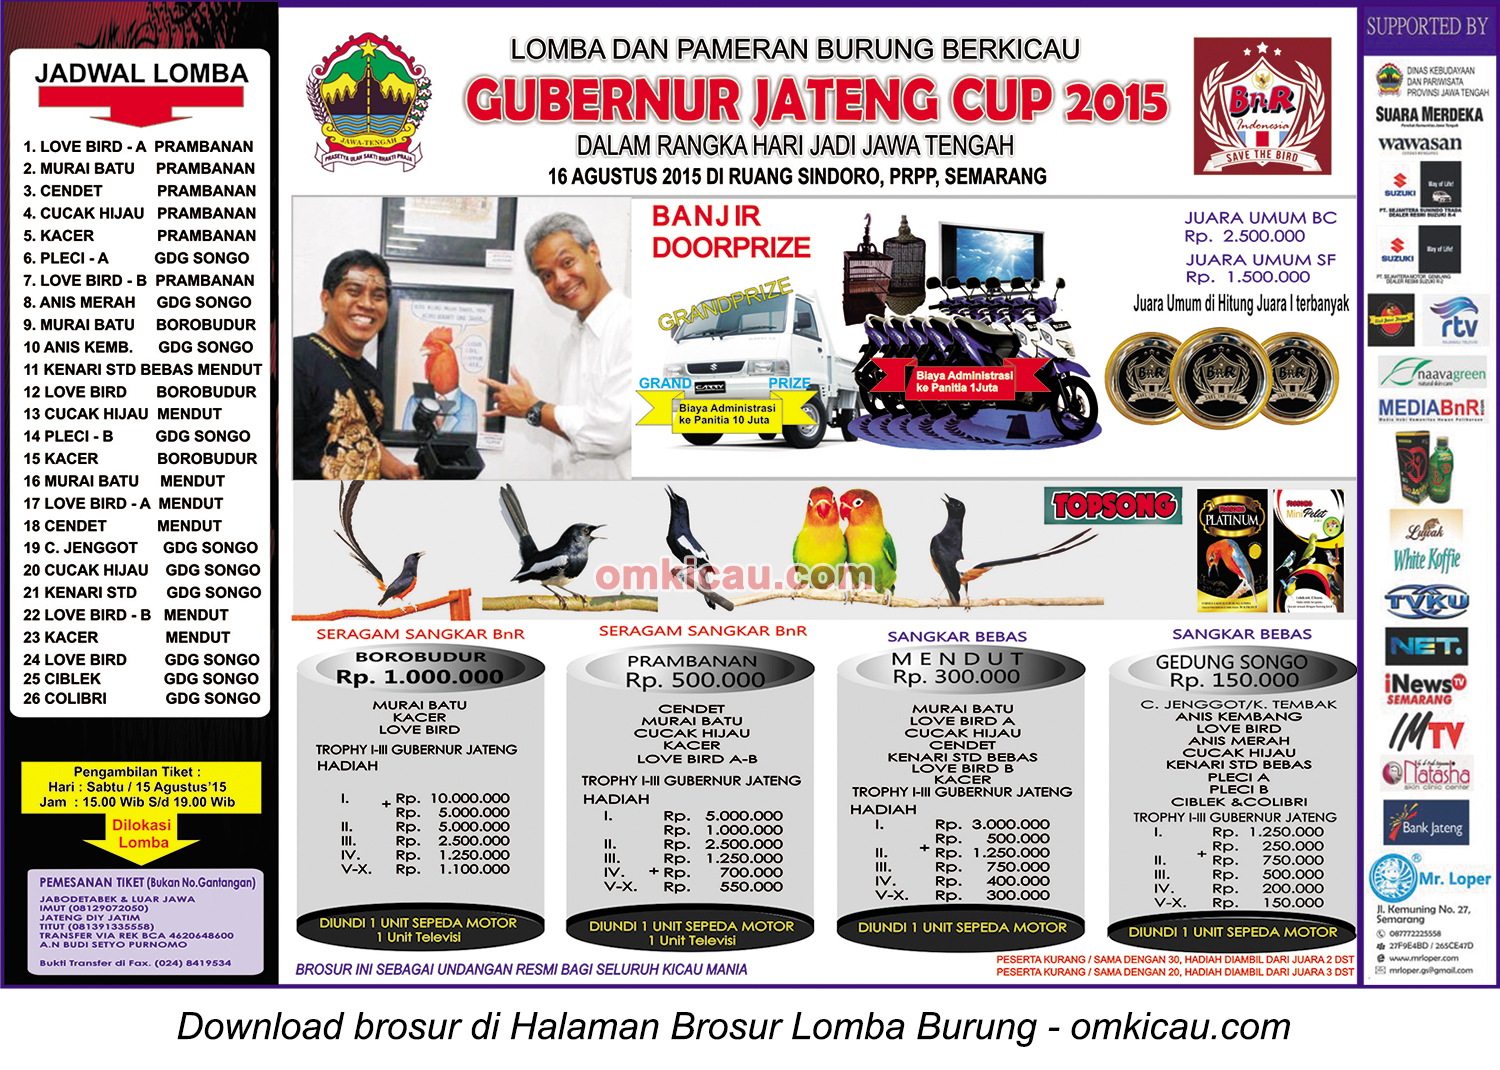 Brosur (perbaikan) Lomba Burung Berkicau Gubernur Jateng Cup, Semarang, 16 Agustus 2015